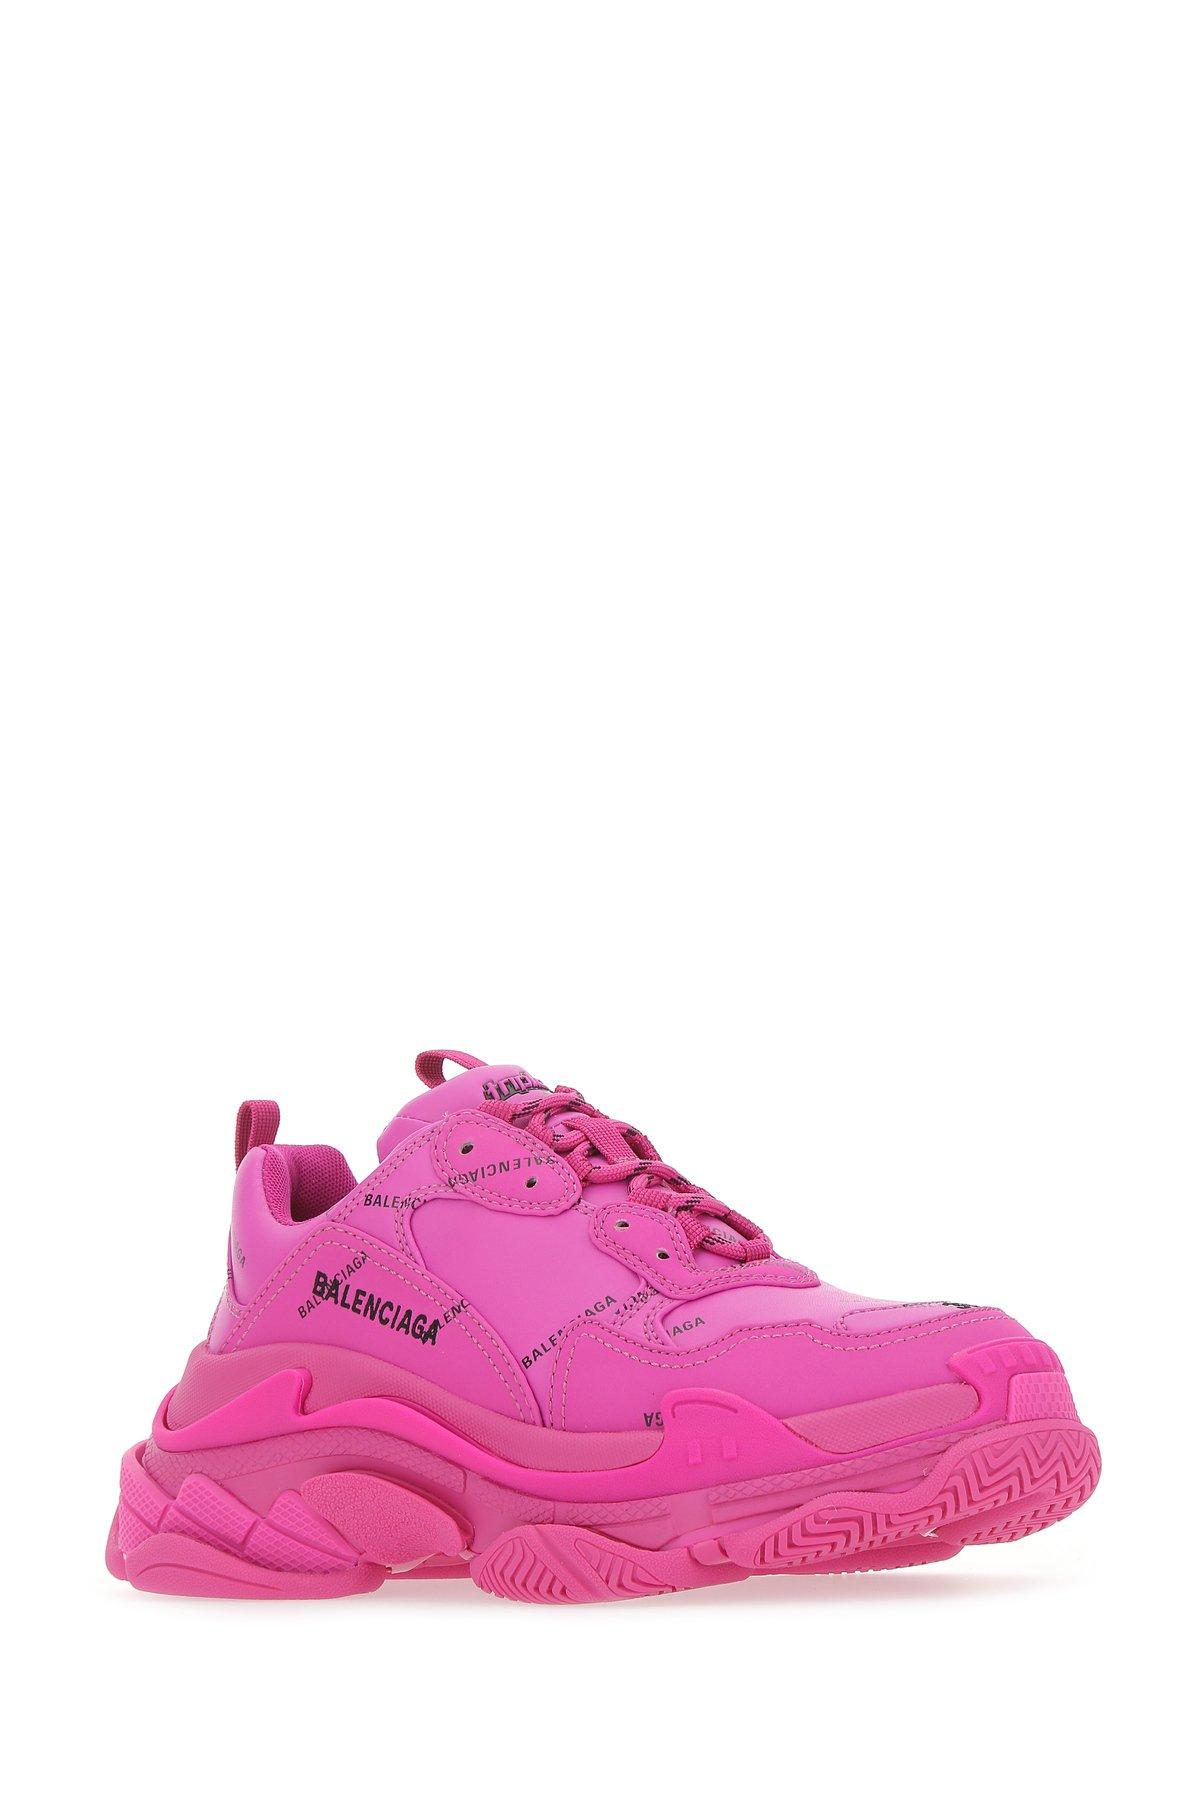 Balenciaga Triple S Sneaker in Pink - Save 54% - Lyst